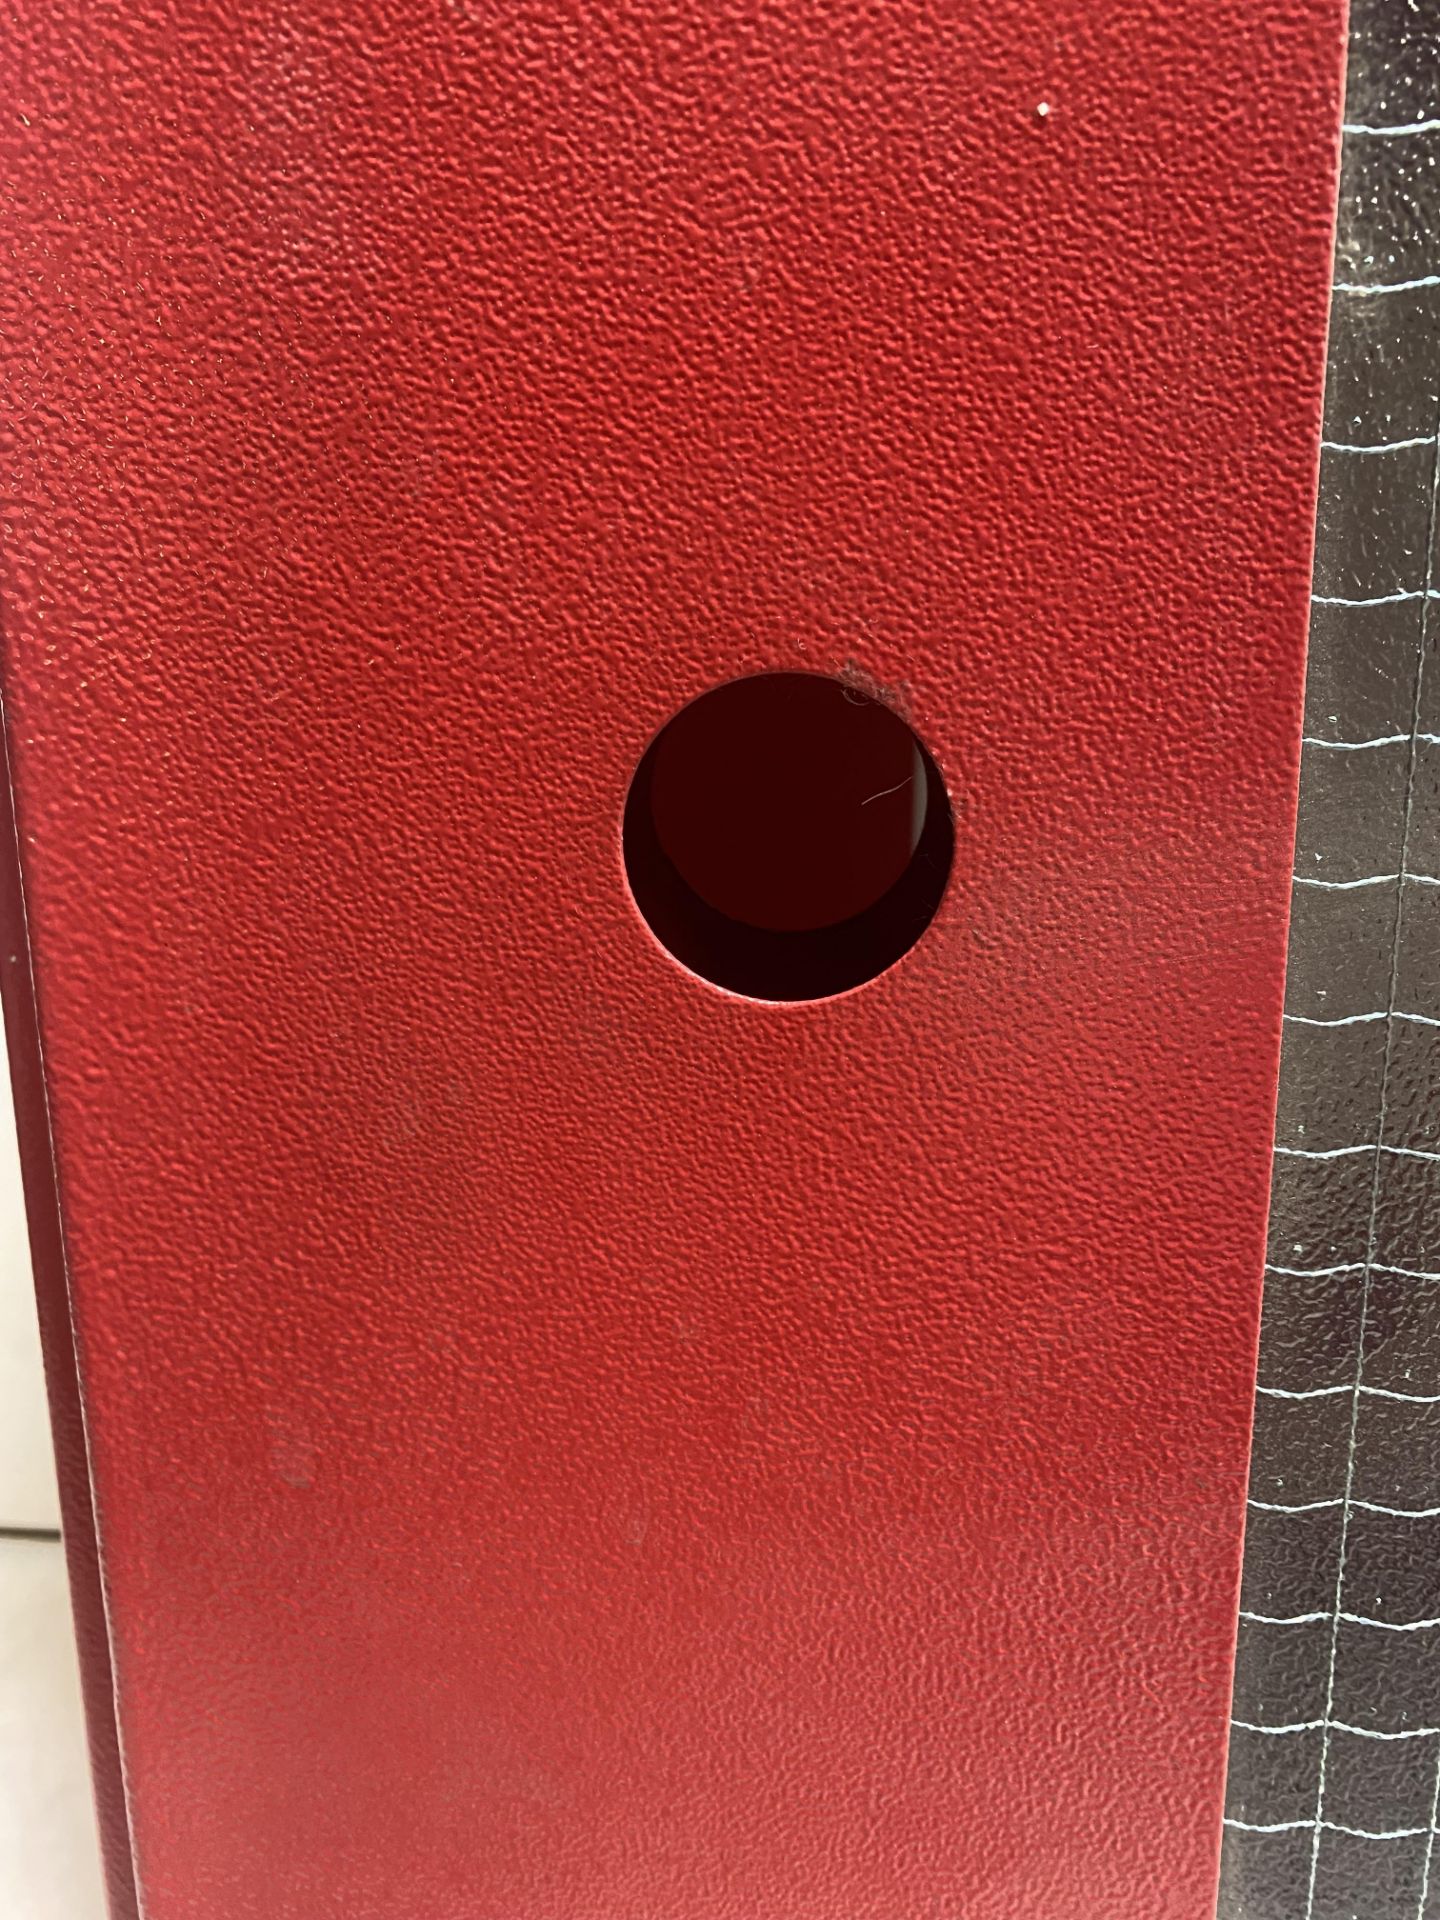 JD Fire Red Dry Riser Outlet Cabinet - Bild 3 aus 7